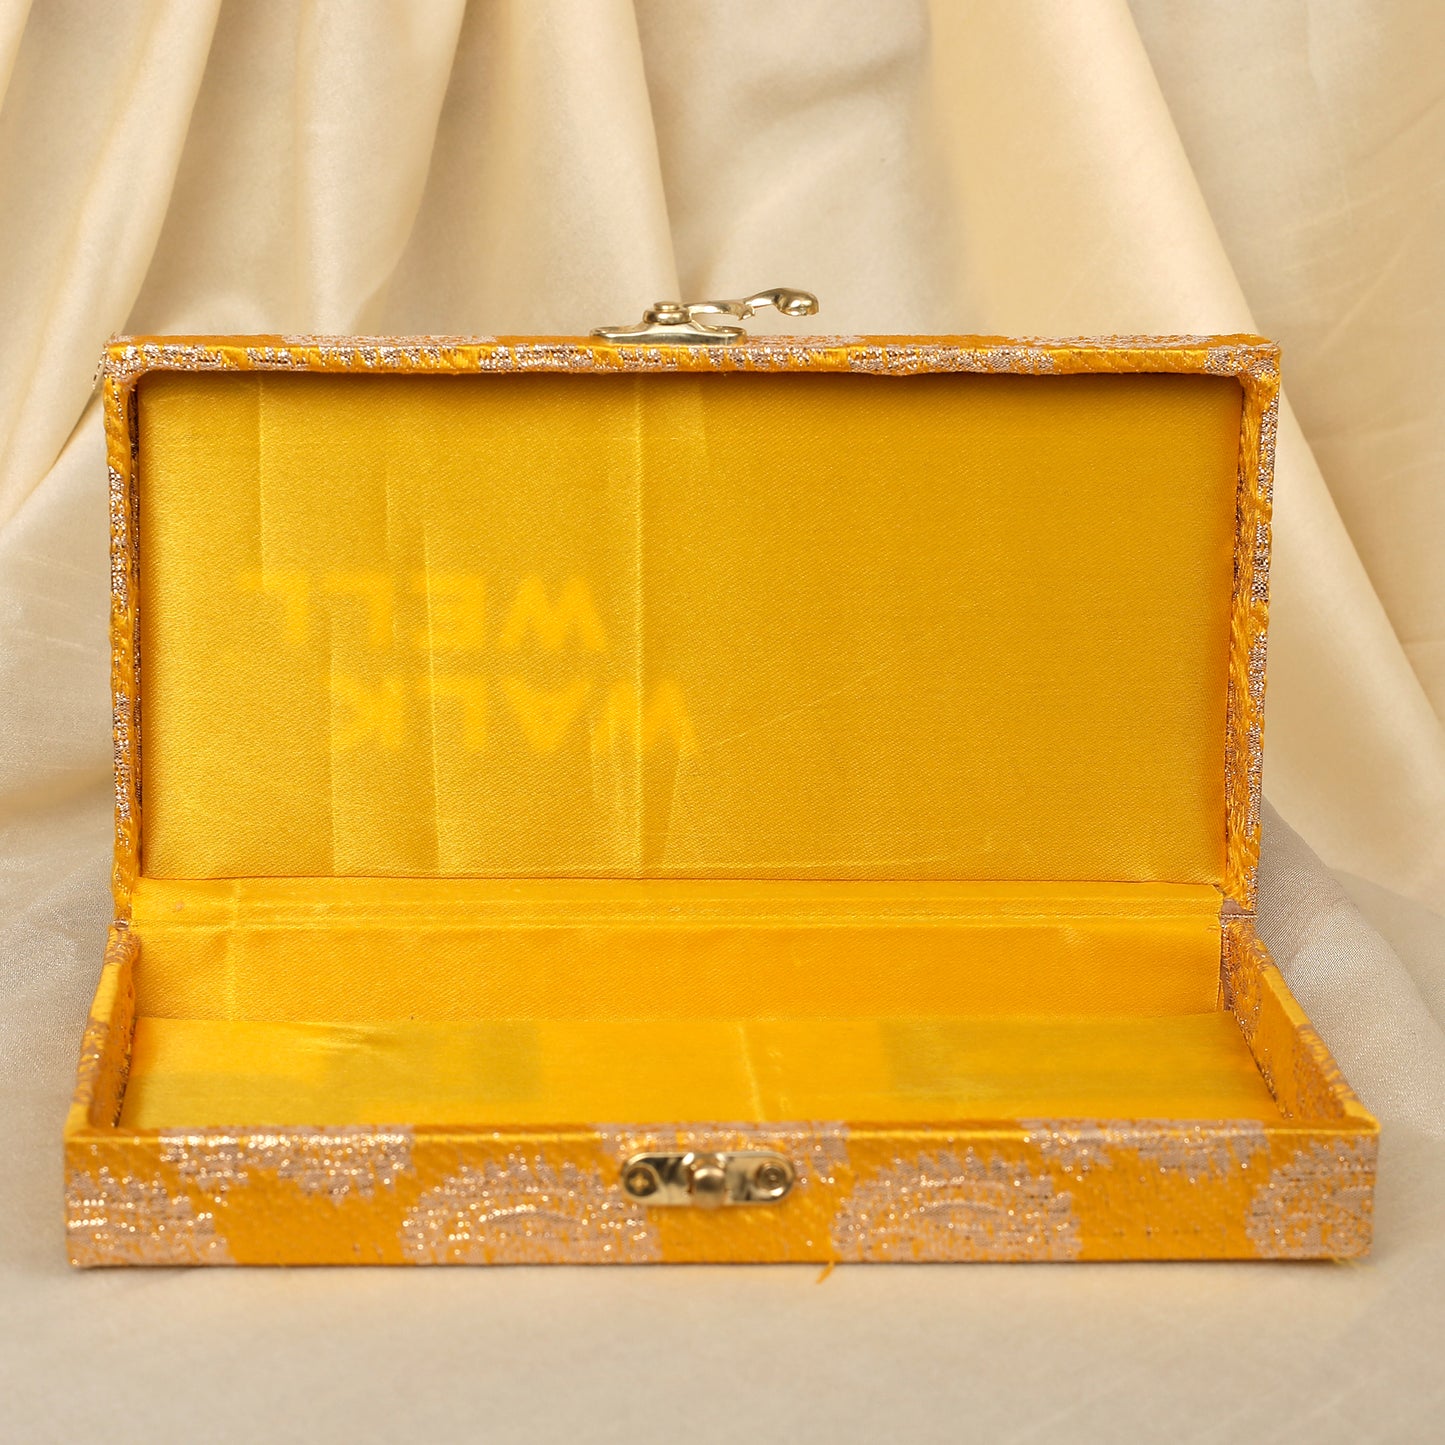 The Yellow Nayab Cash Box